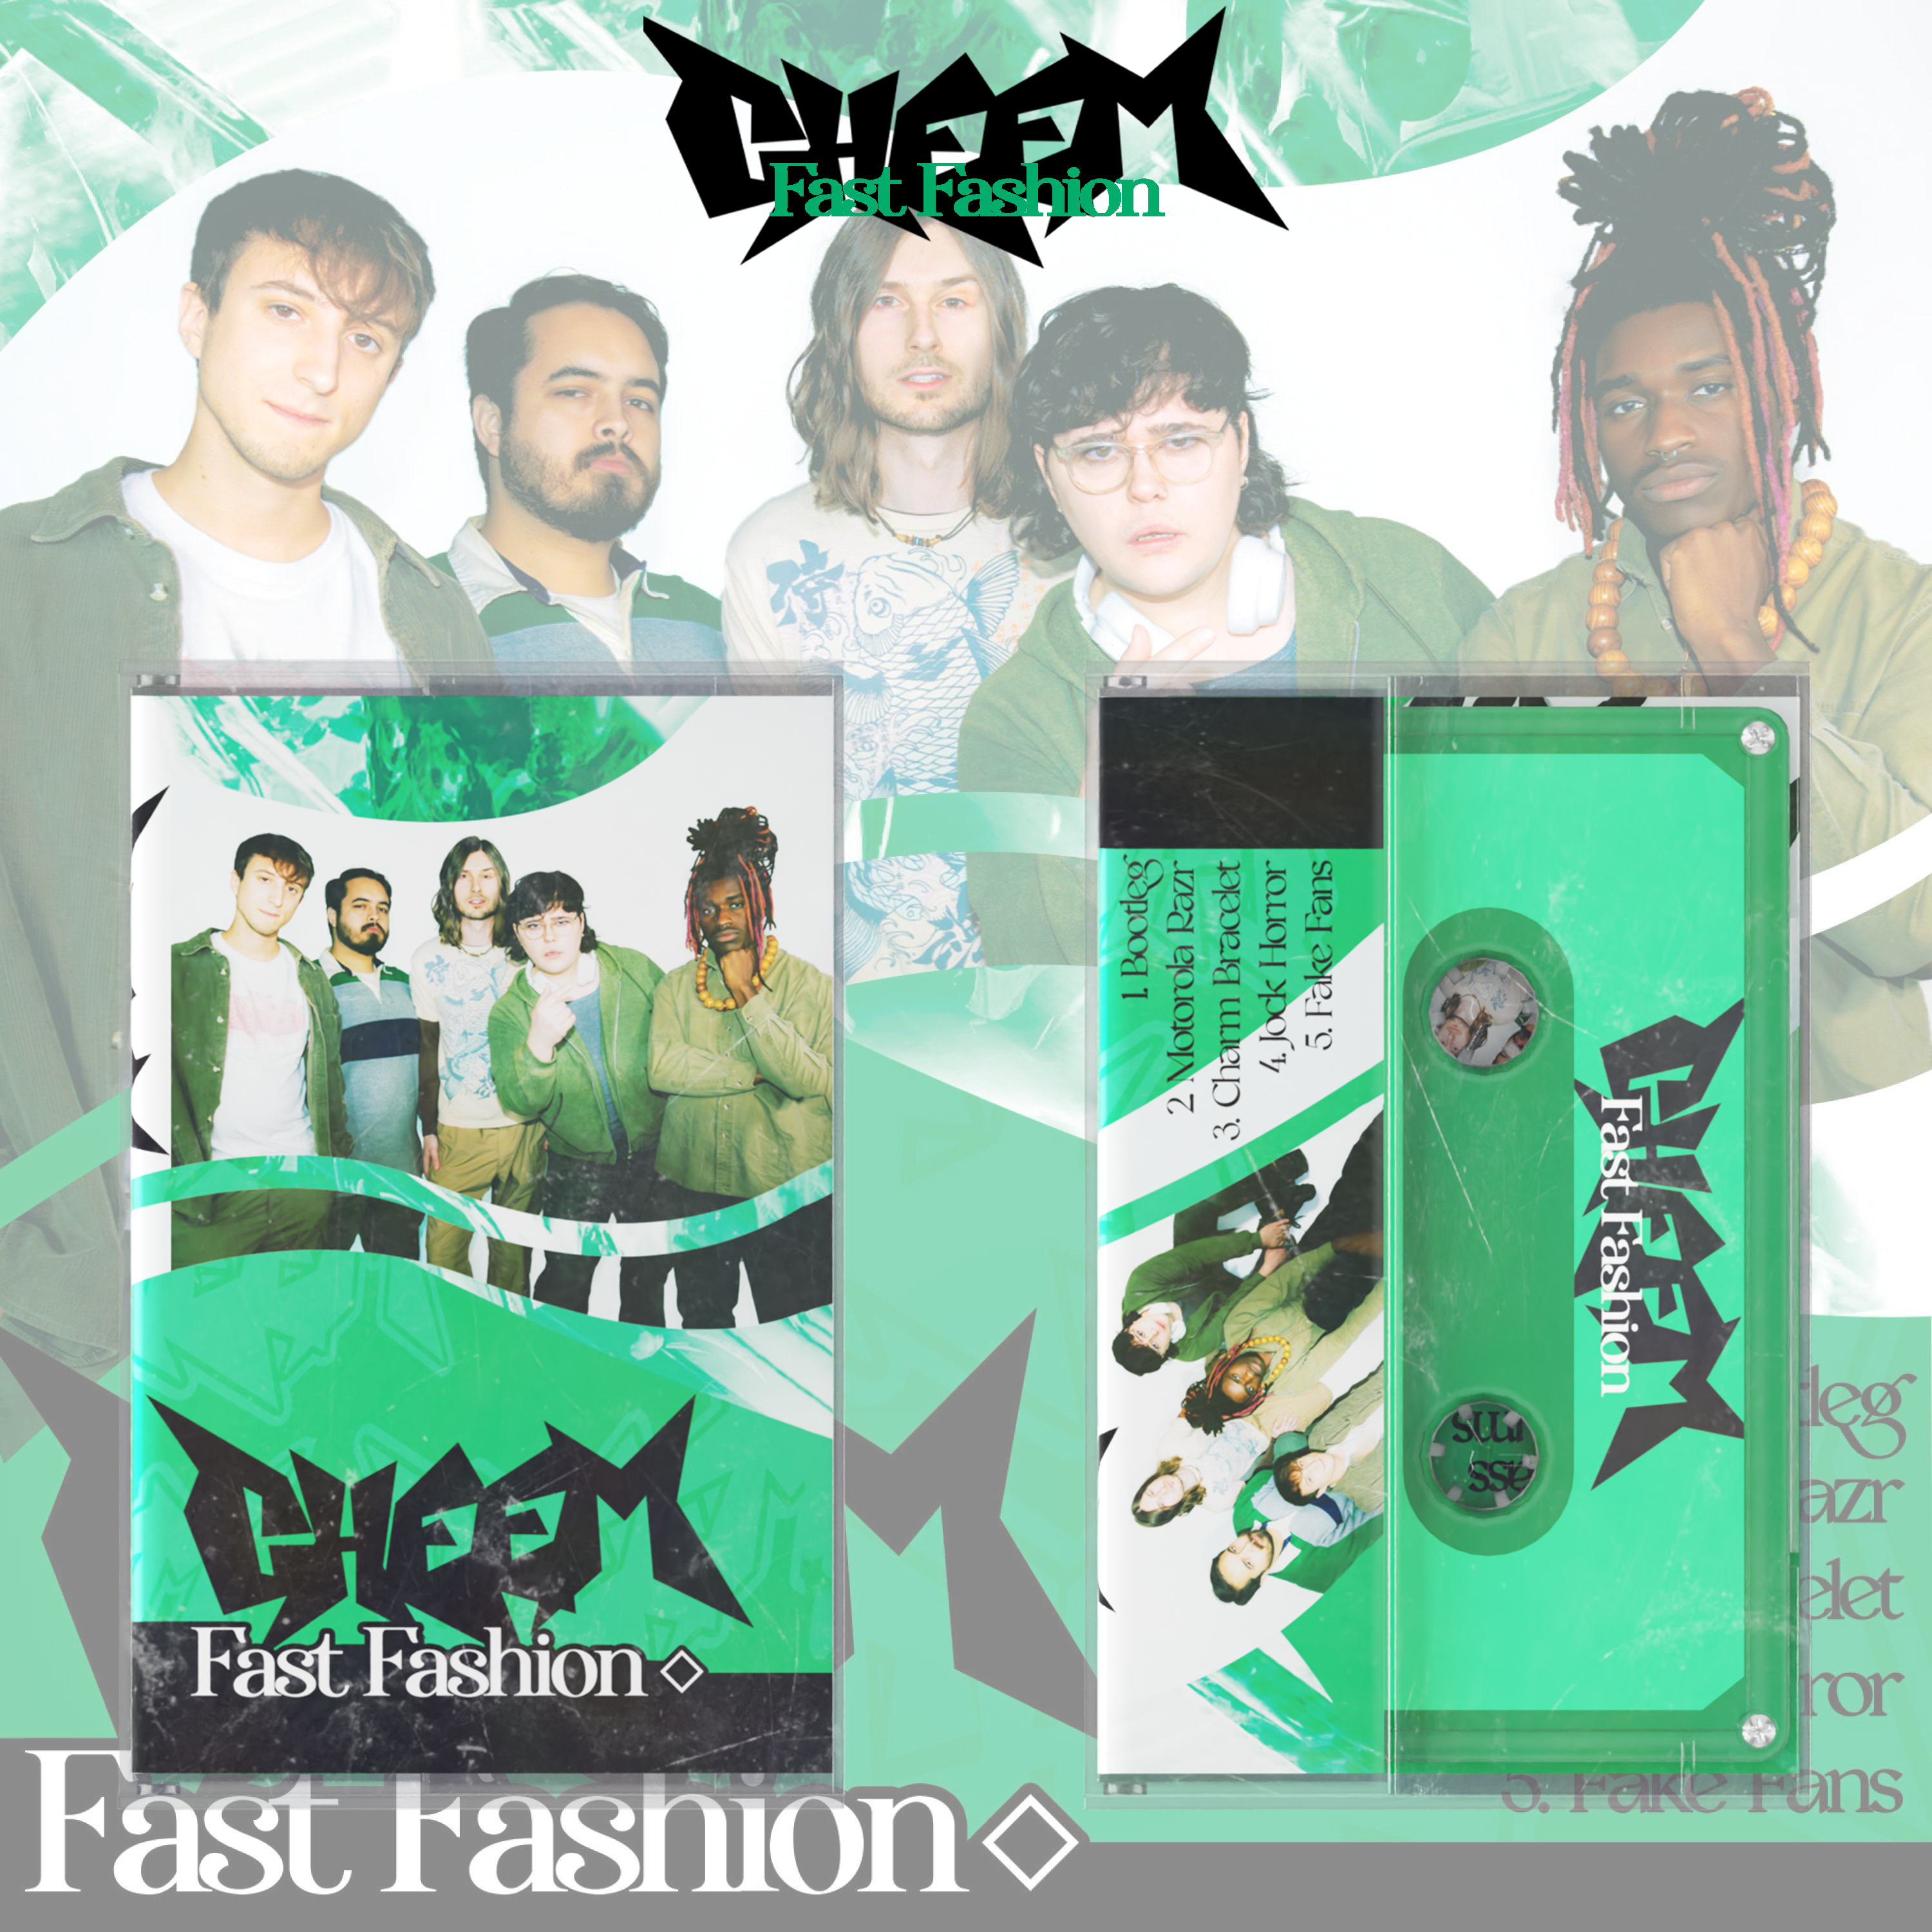 Cheem - Fast Fashion Green Cassette